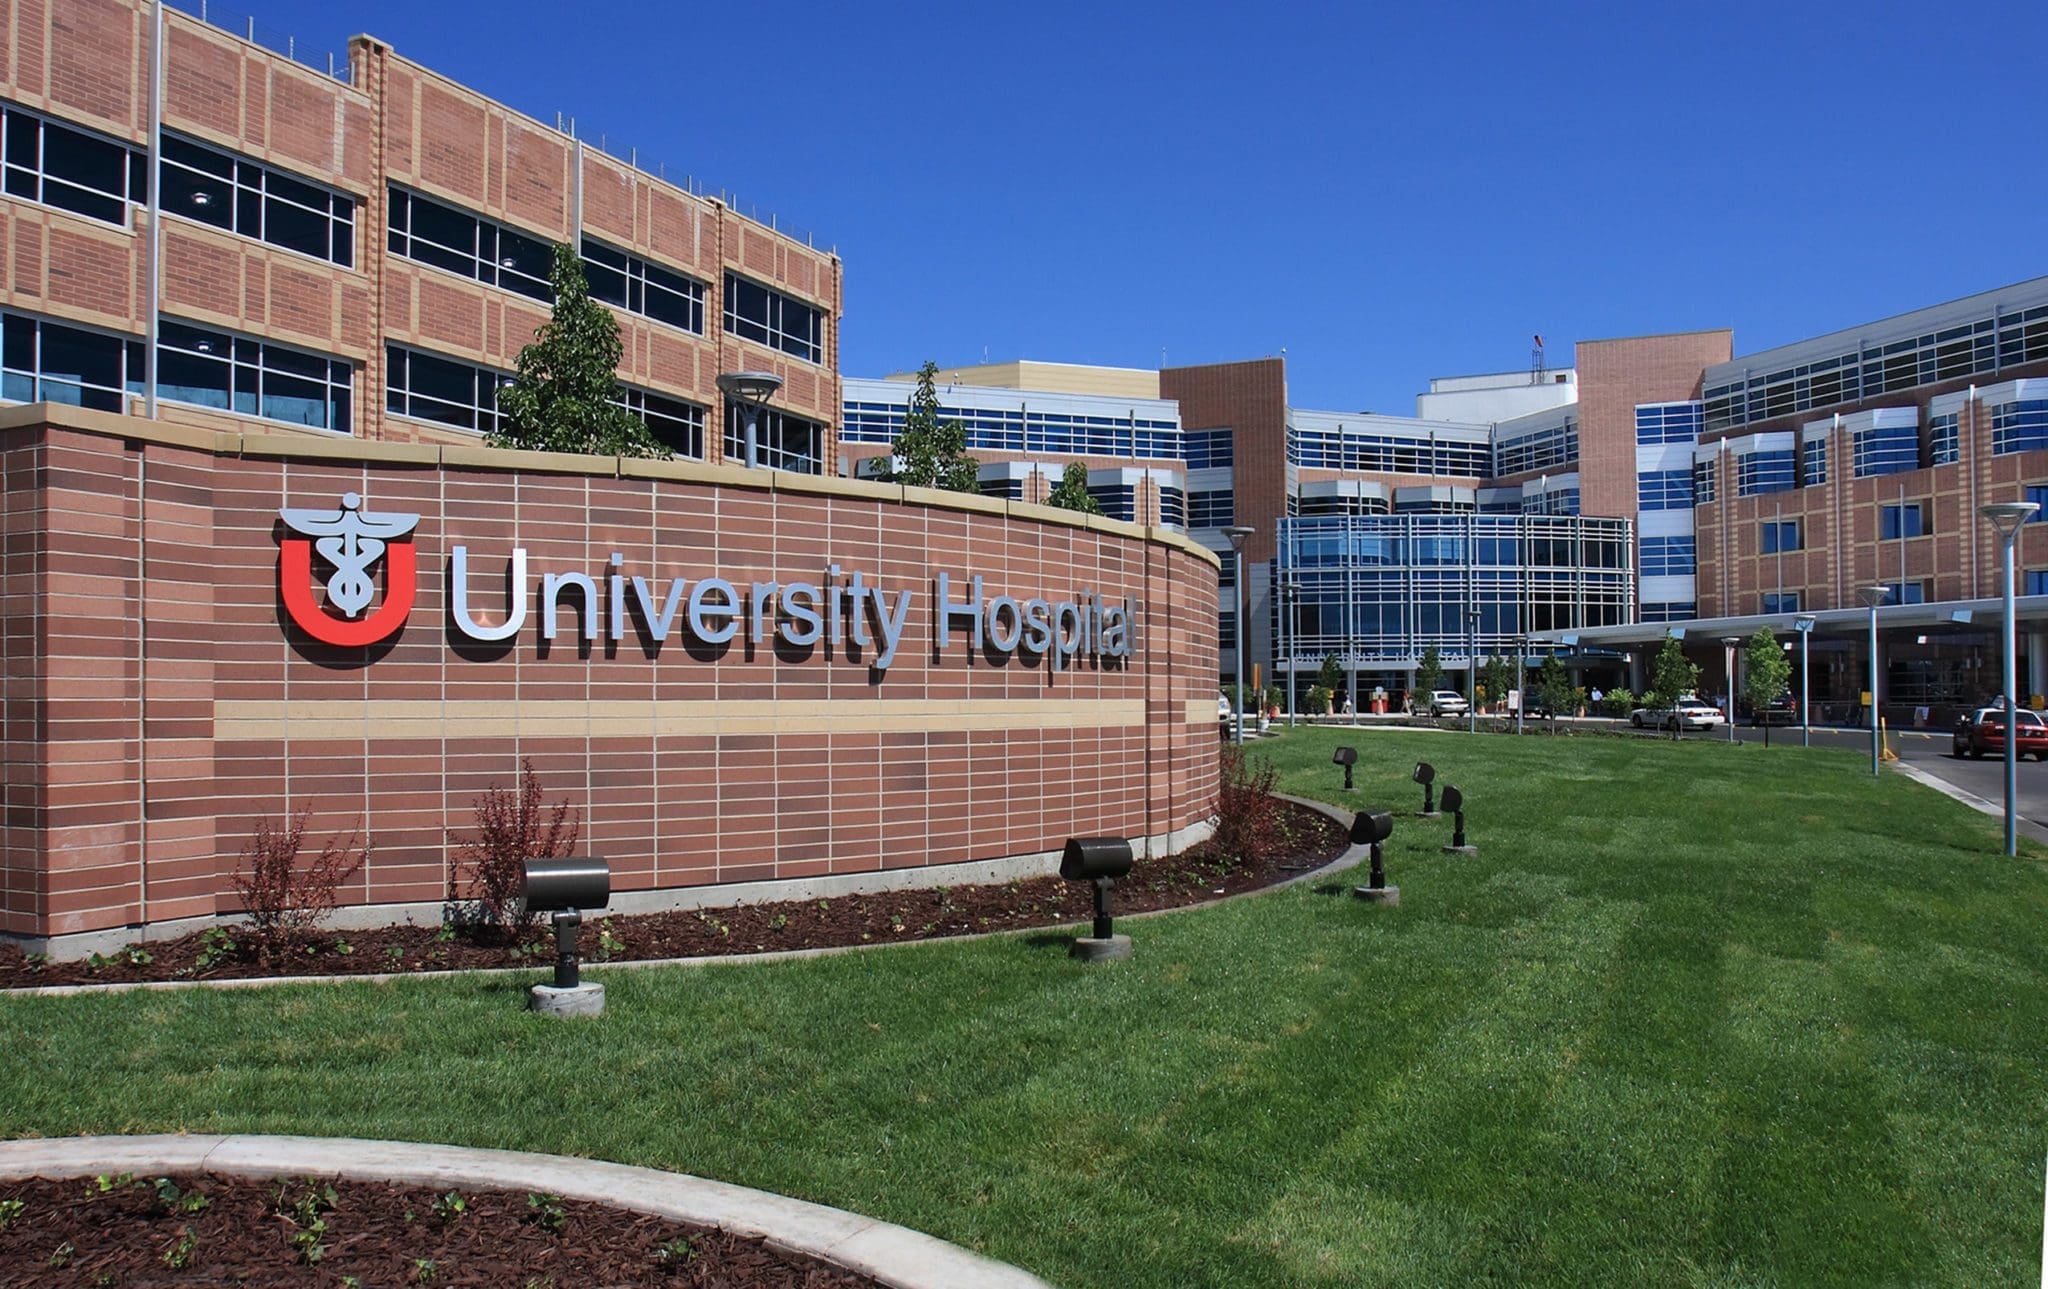 University of Utah Clinical Trial Recruitment